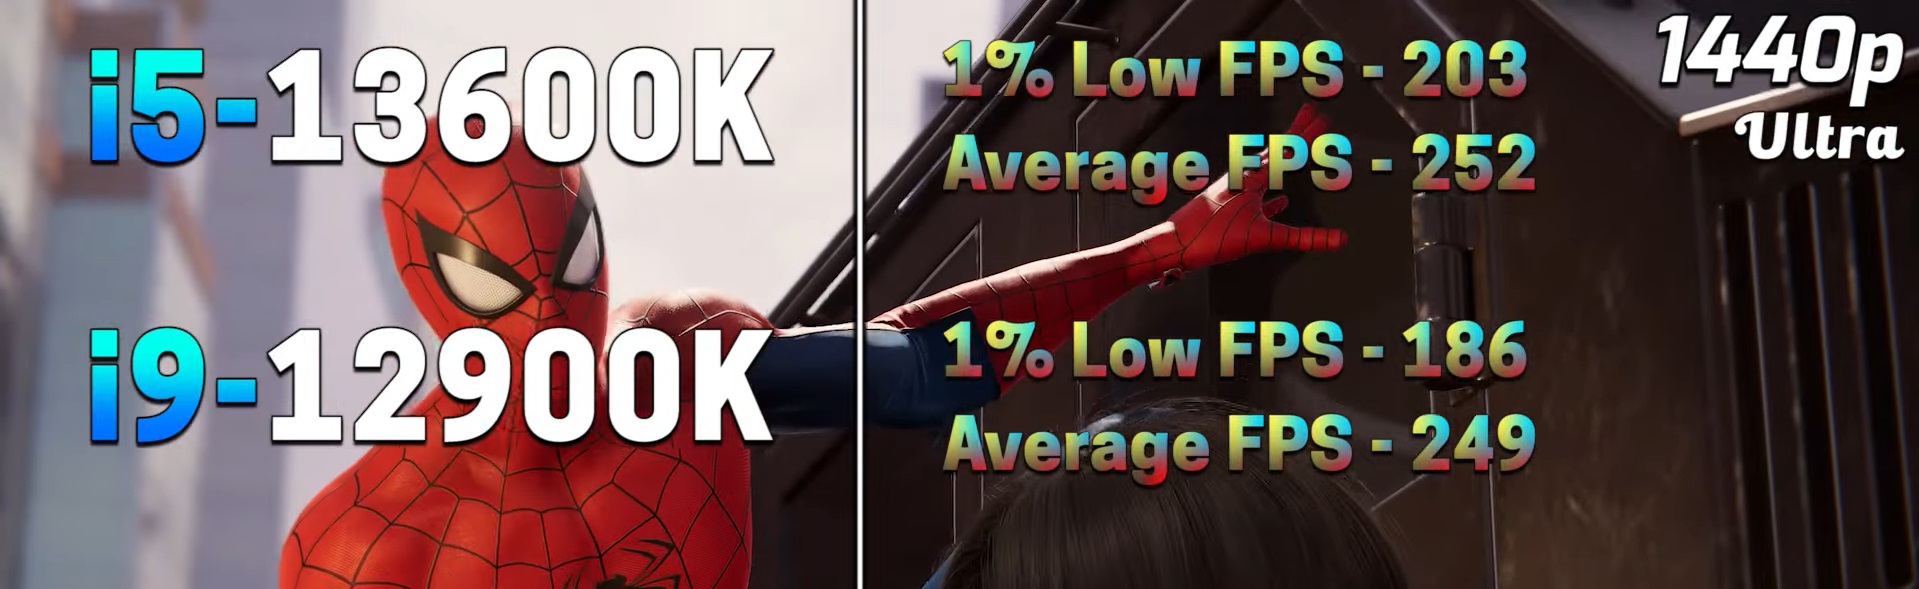 Marvel's Spiderman remastered 1440p benchmark